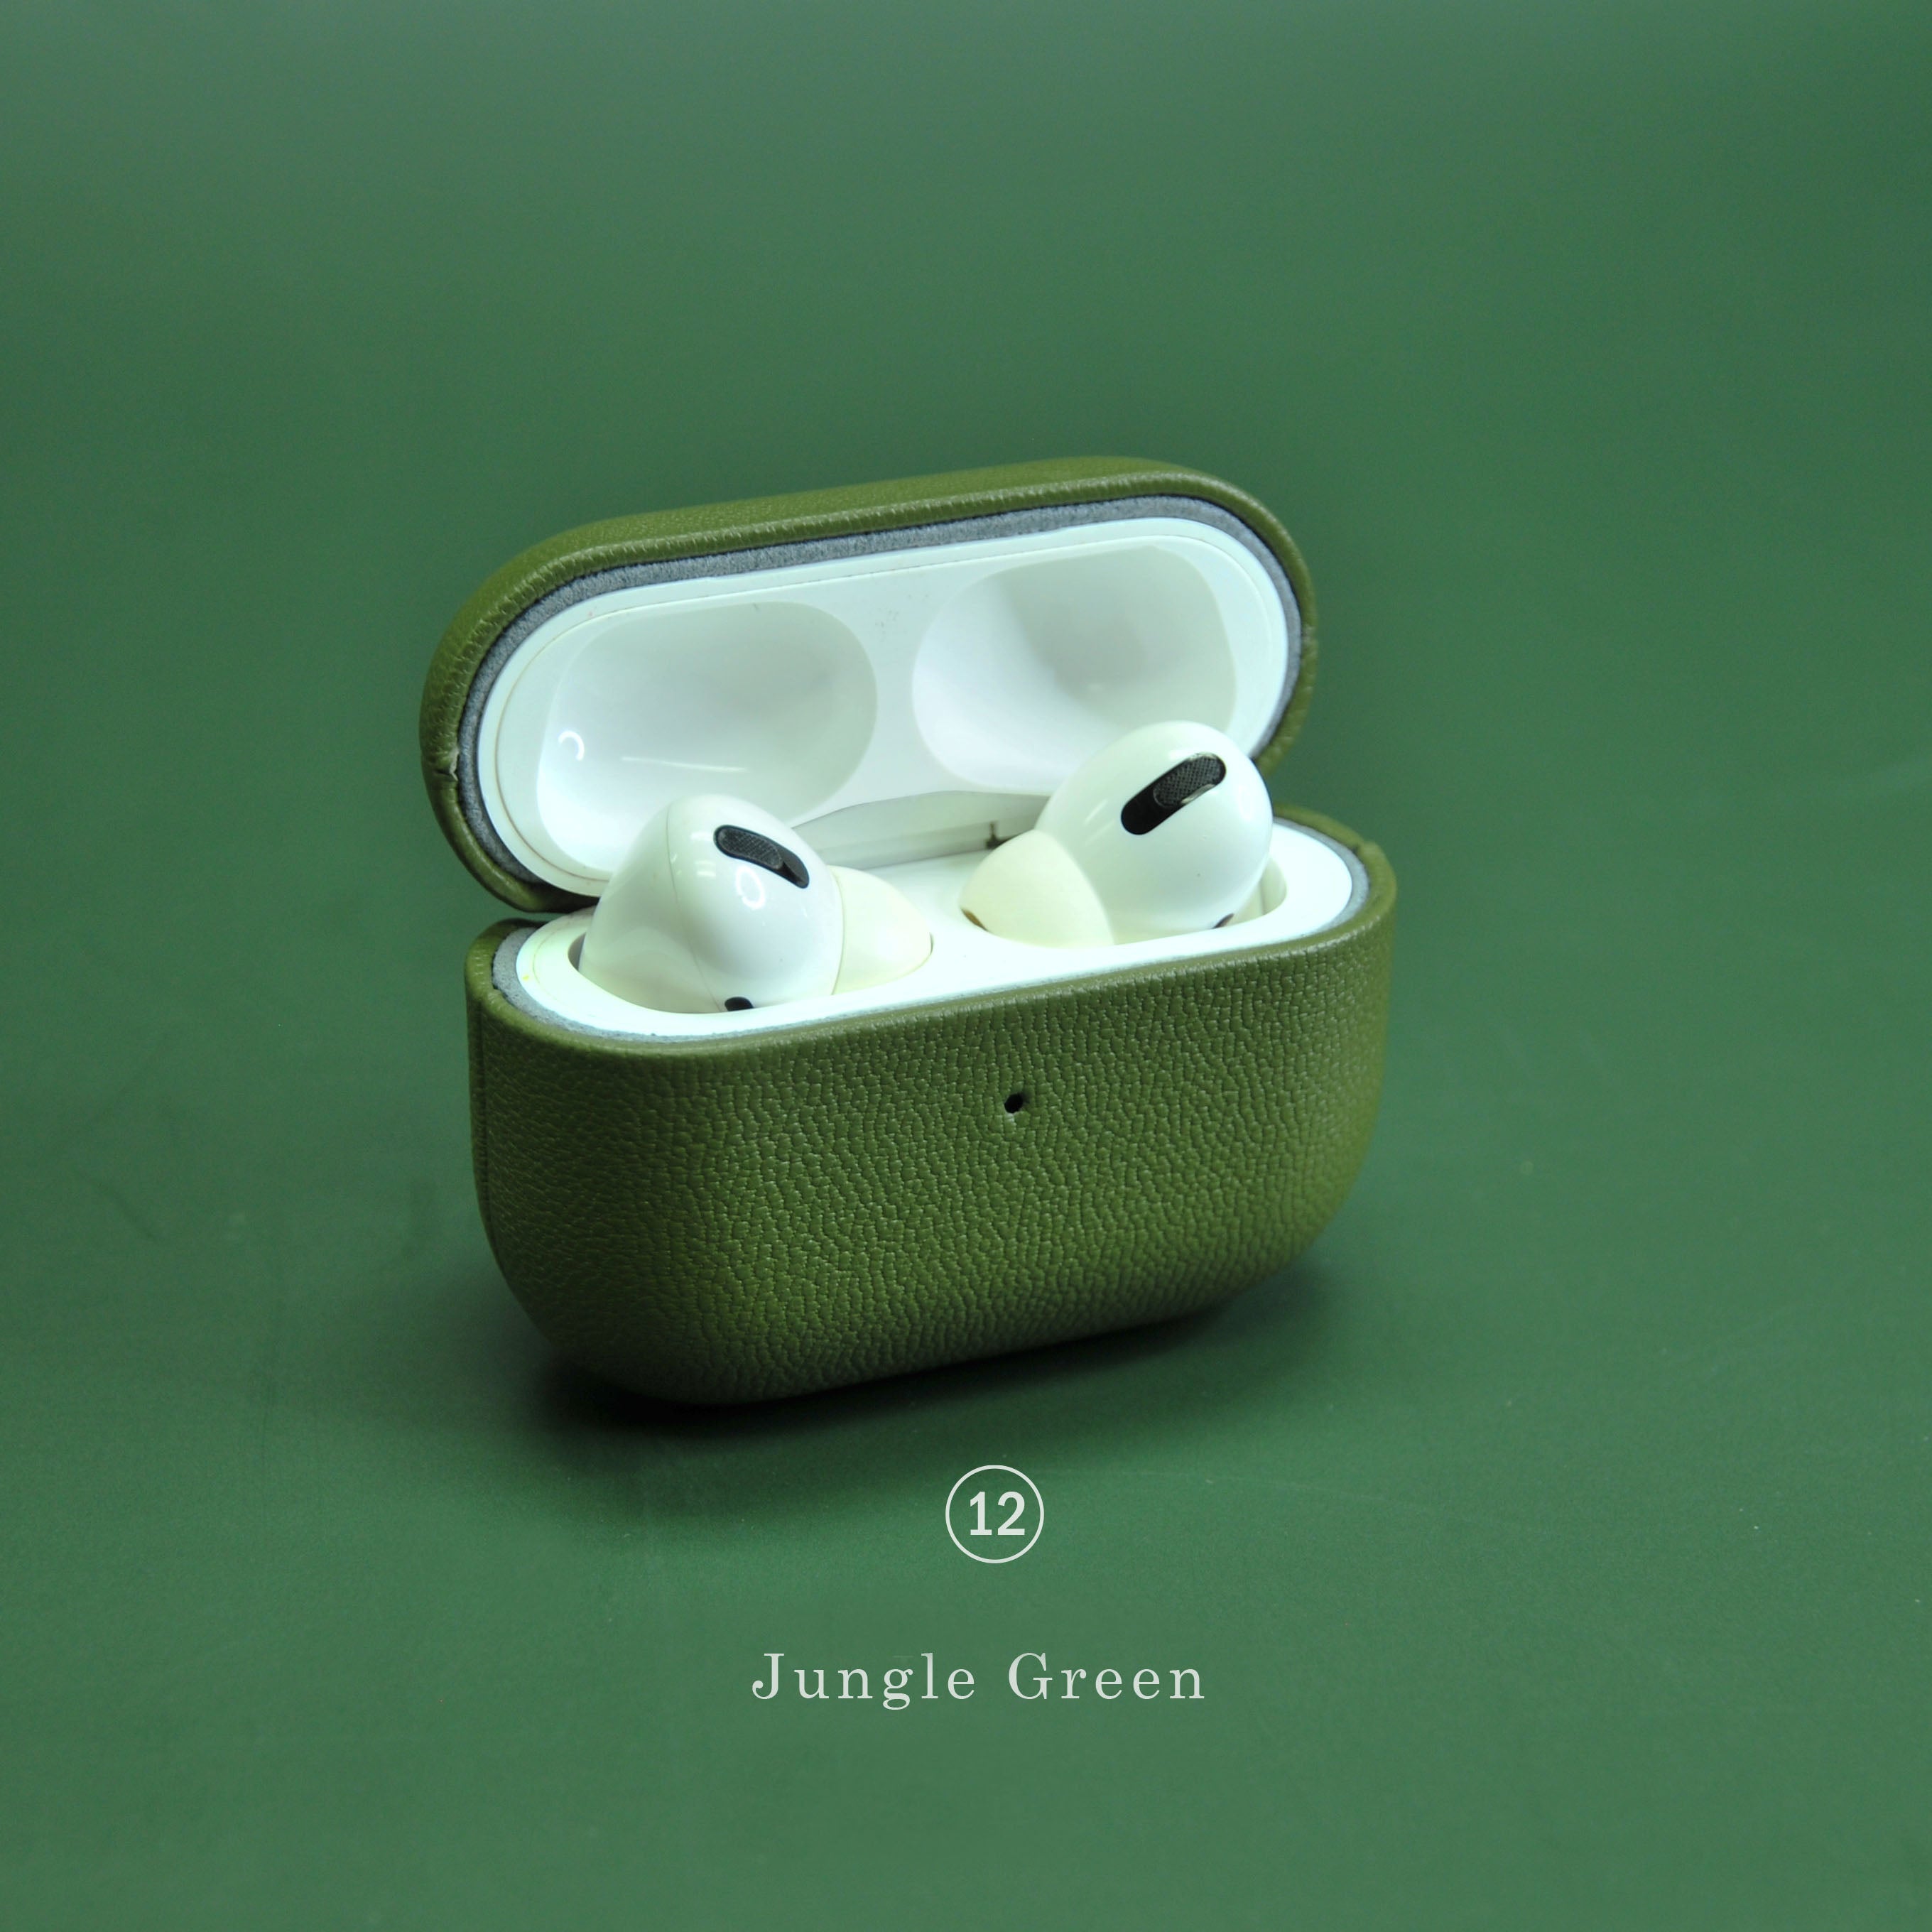 Jungle Green Leather AirPod Case